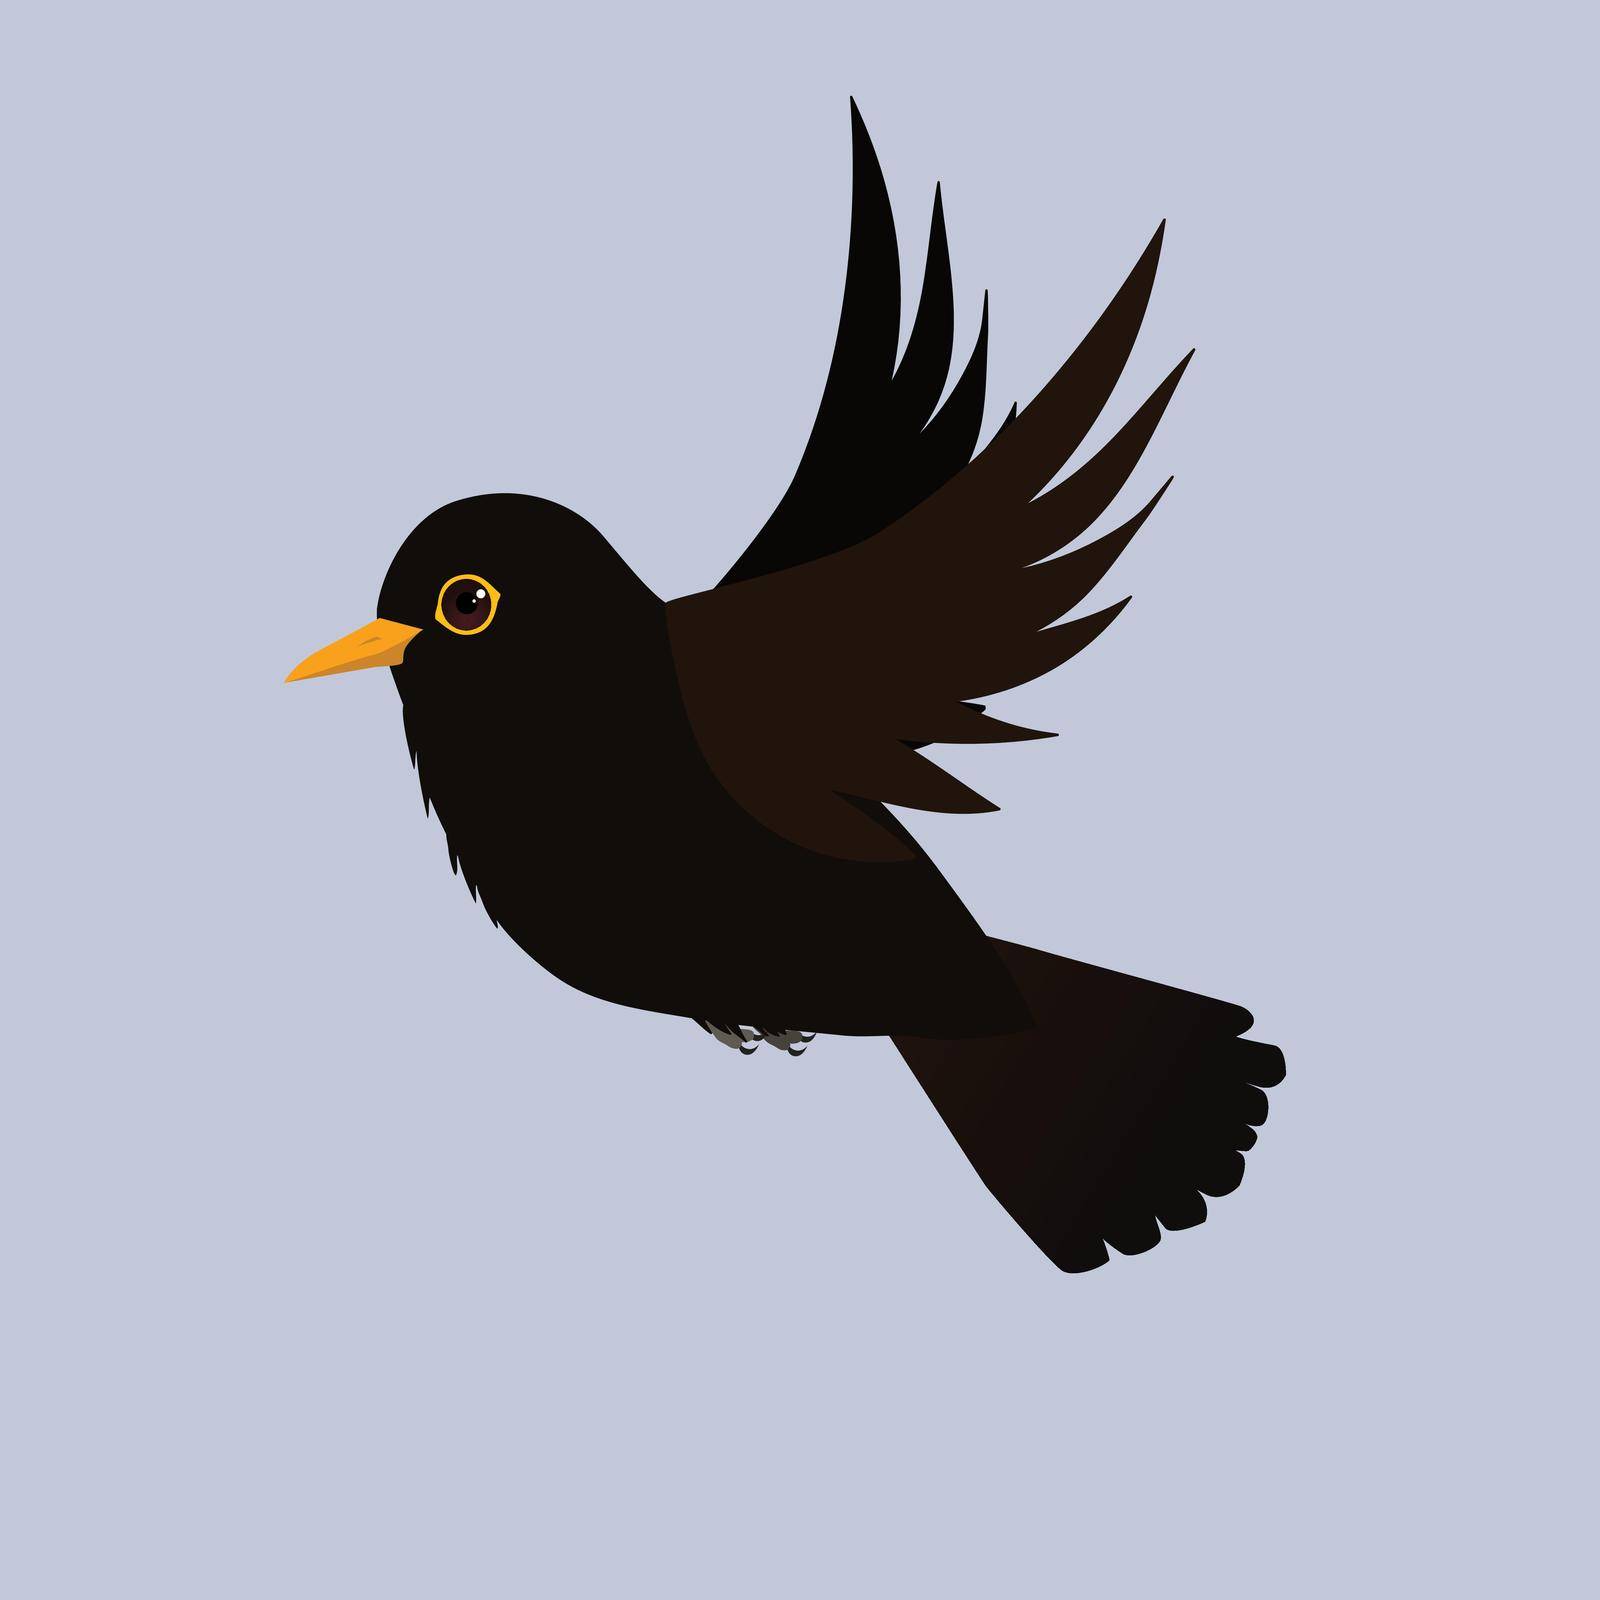 Blackbird flying by Bwise